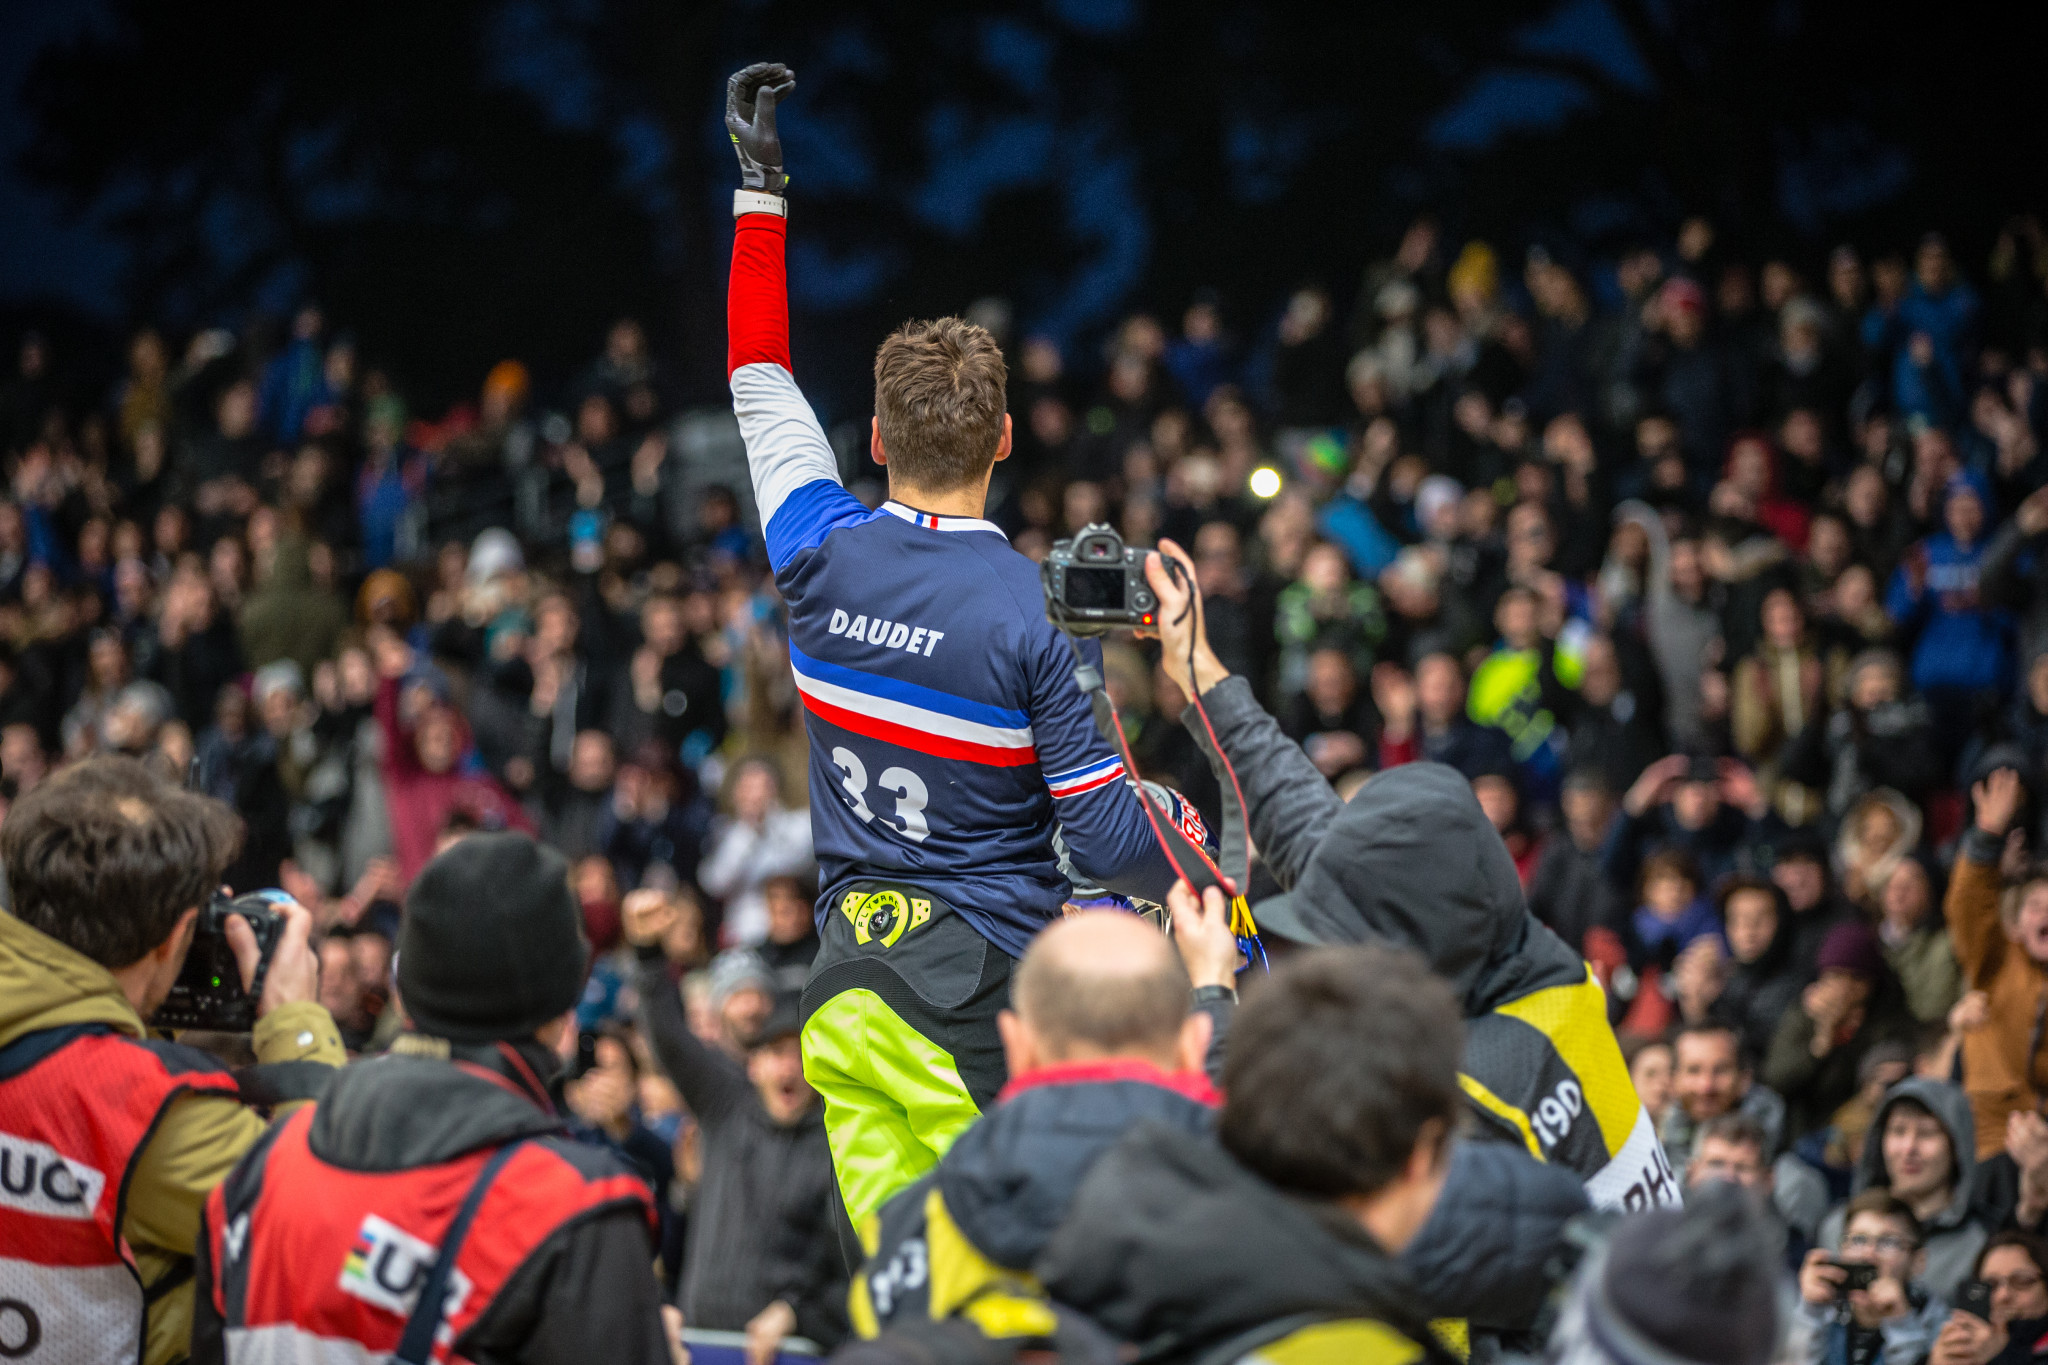 Frenchman Joris Daudet leads the International Cycling Union BMX Supercross World Cup rankings ©Craig Dutton